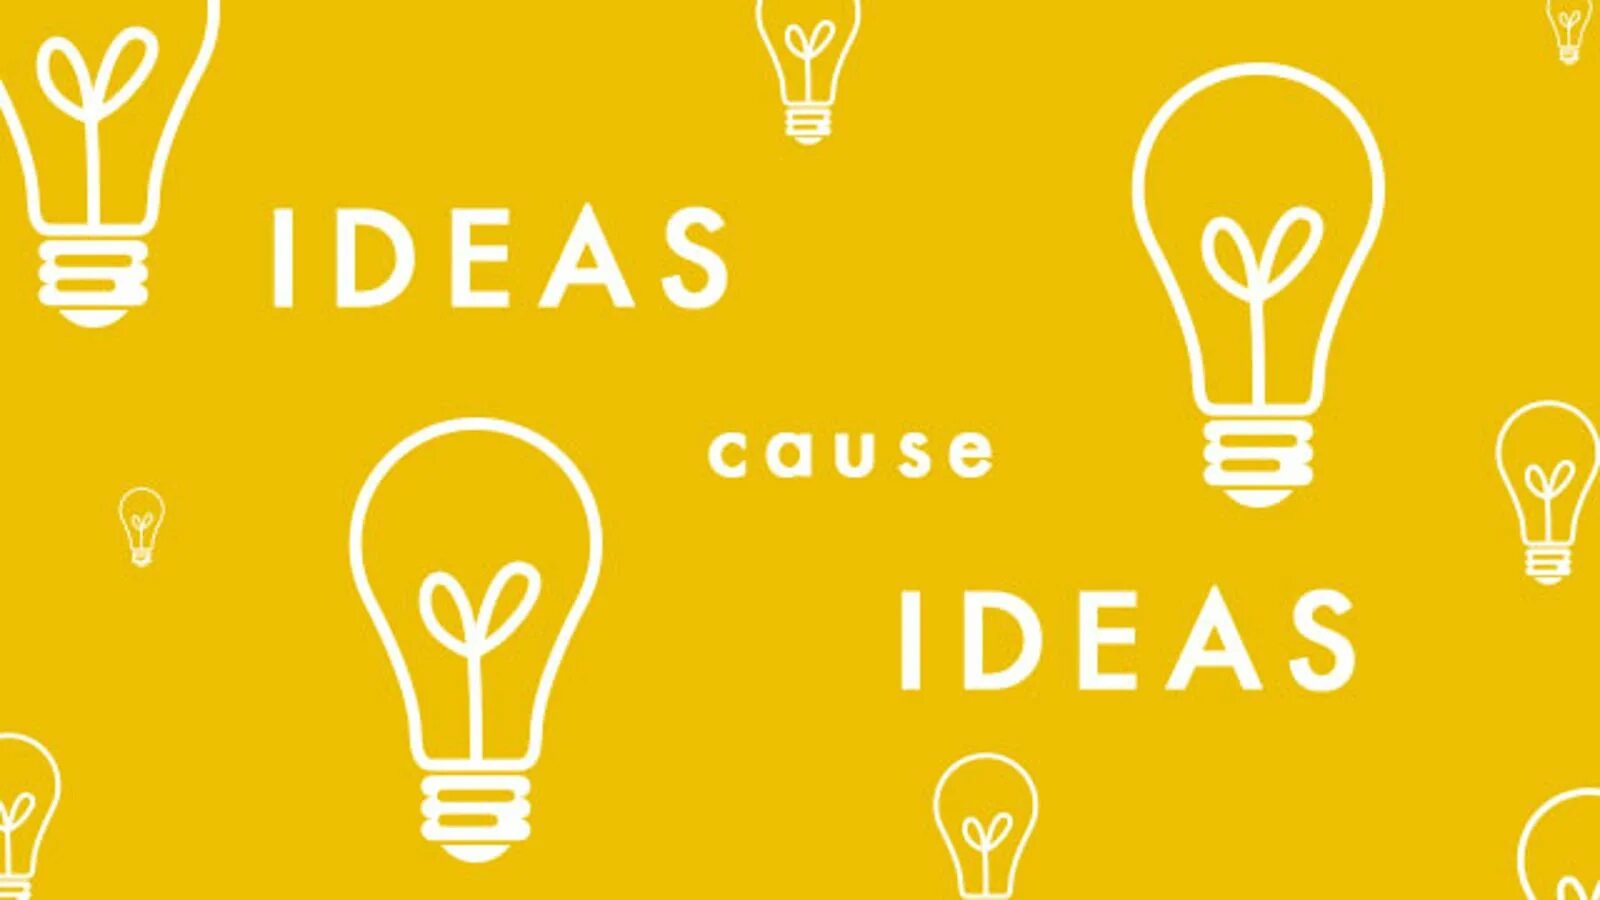 Idea. Share ideas. Best idea картинка. Share your ideas. Idea f